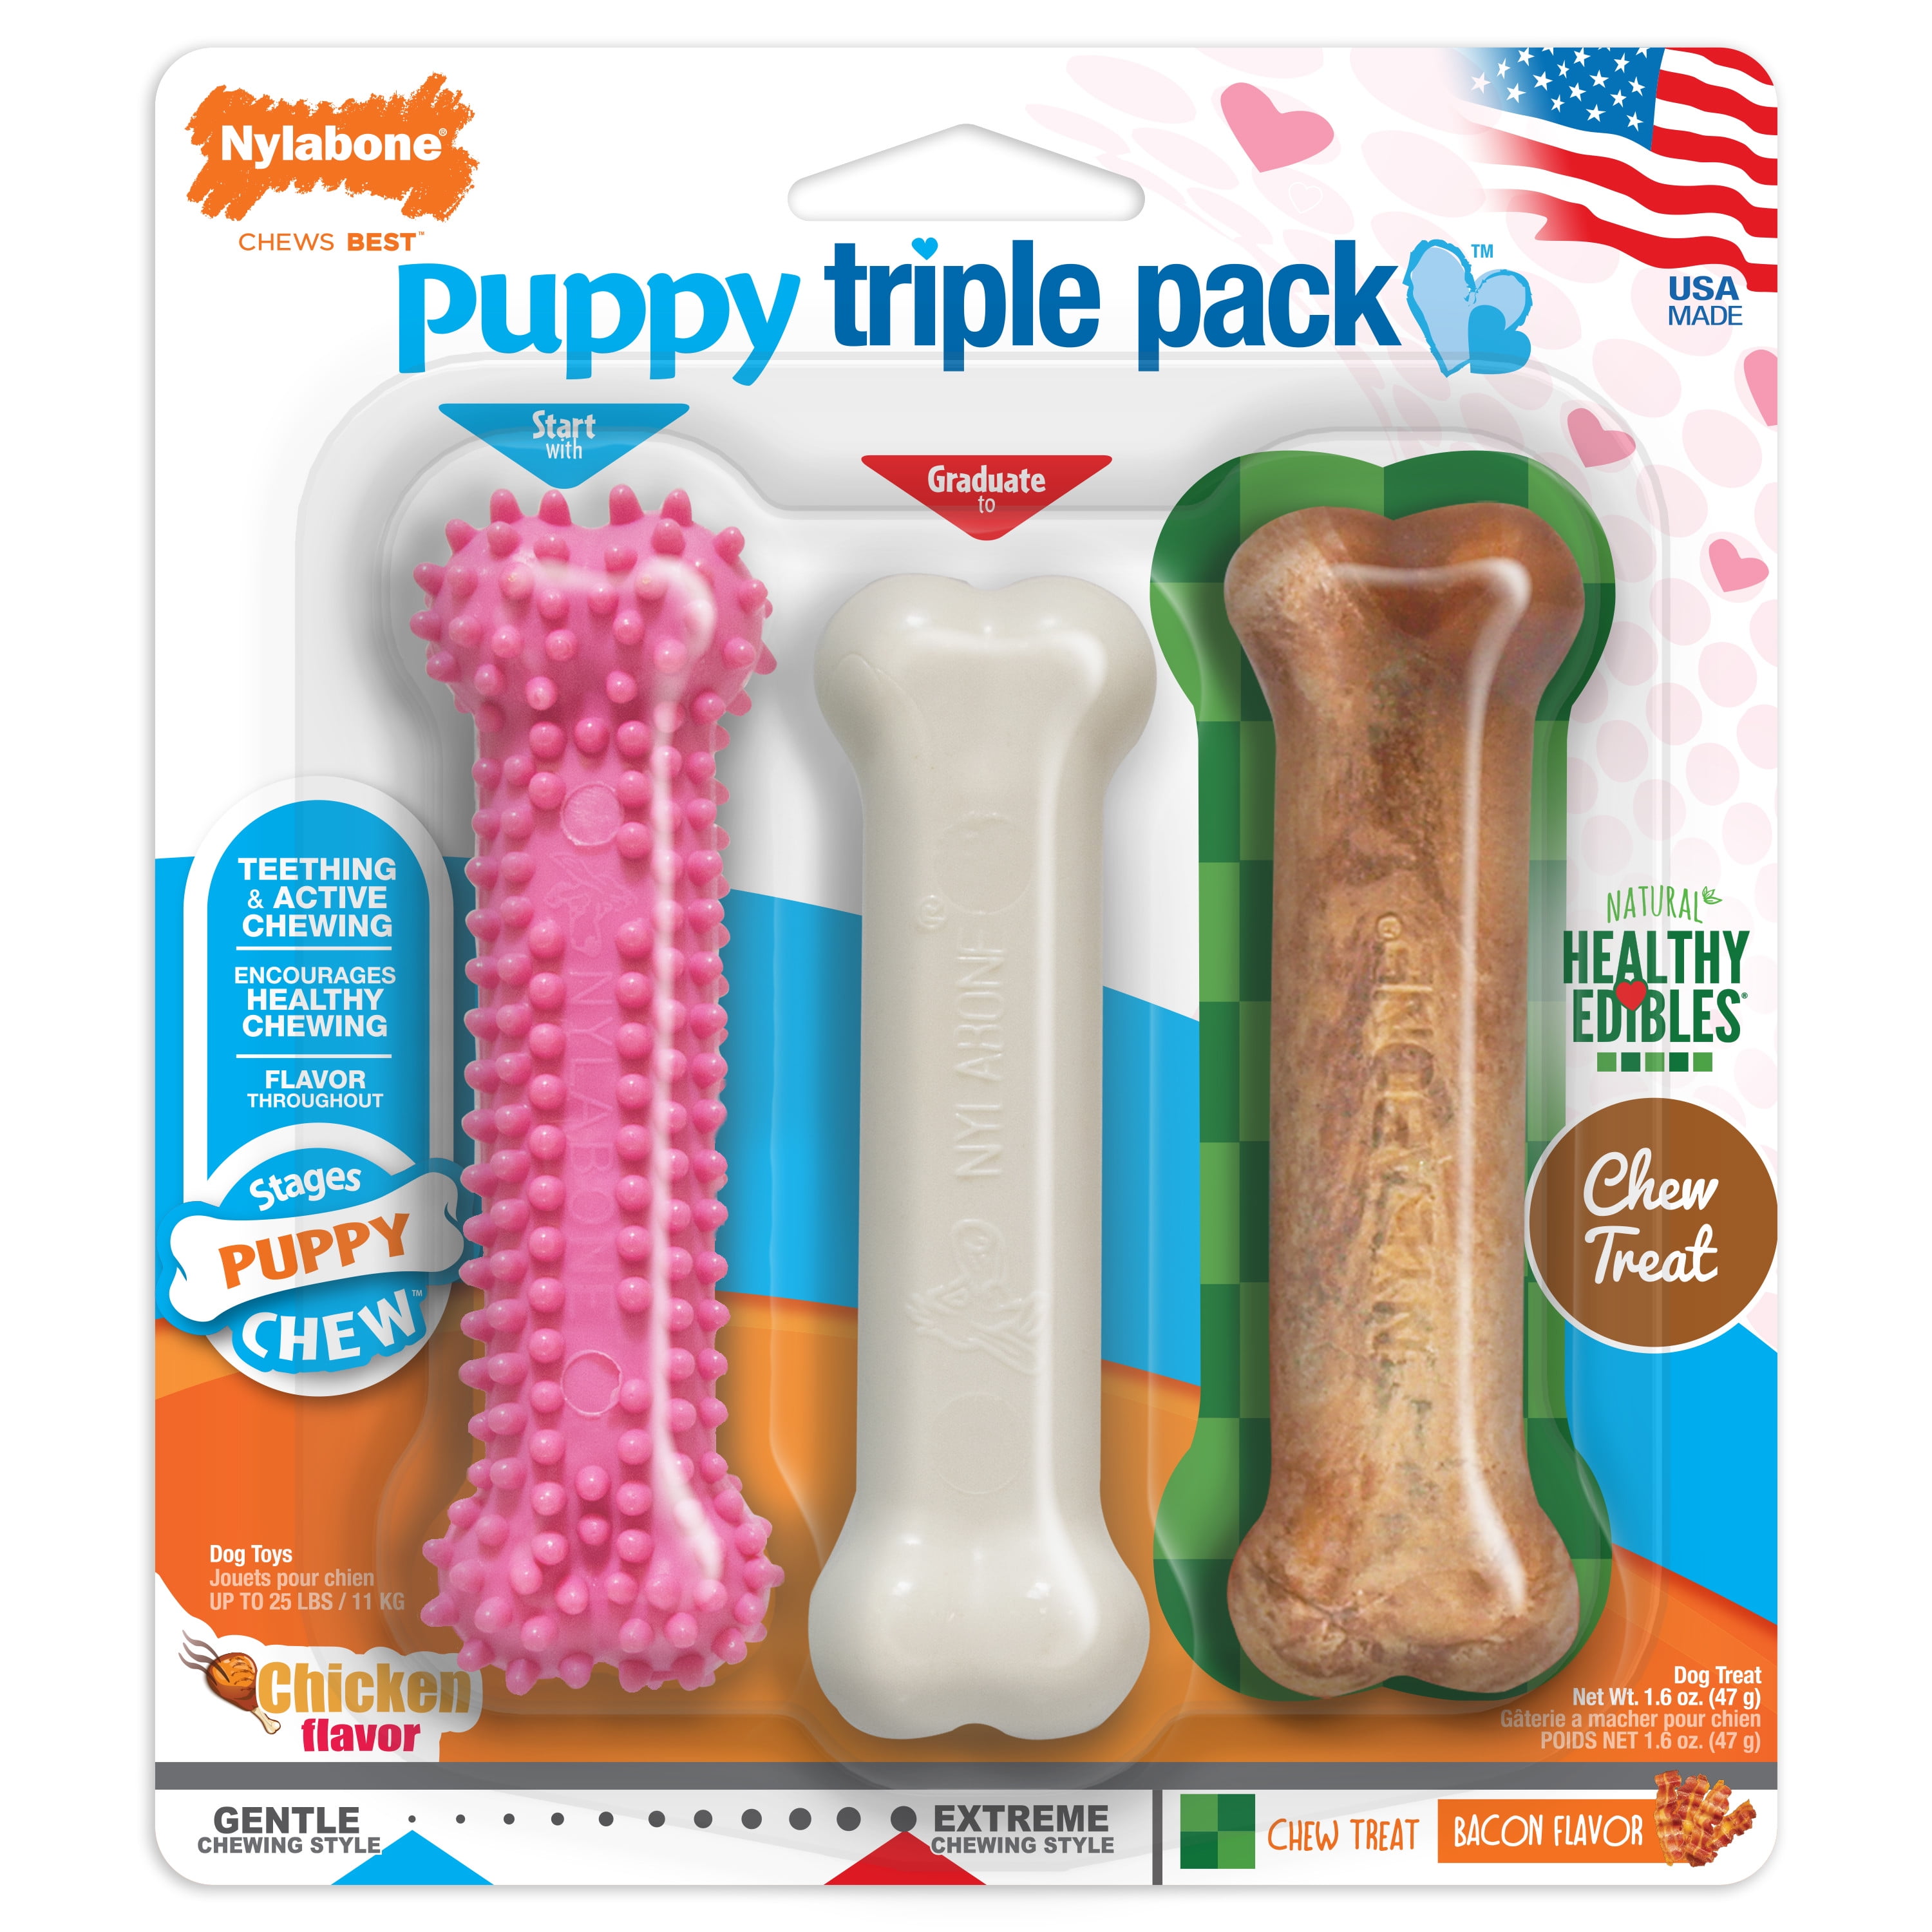 Tfh Publications & Nylabone Nrp002vpp Puppy Chew Triple Pack Pink